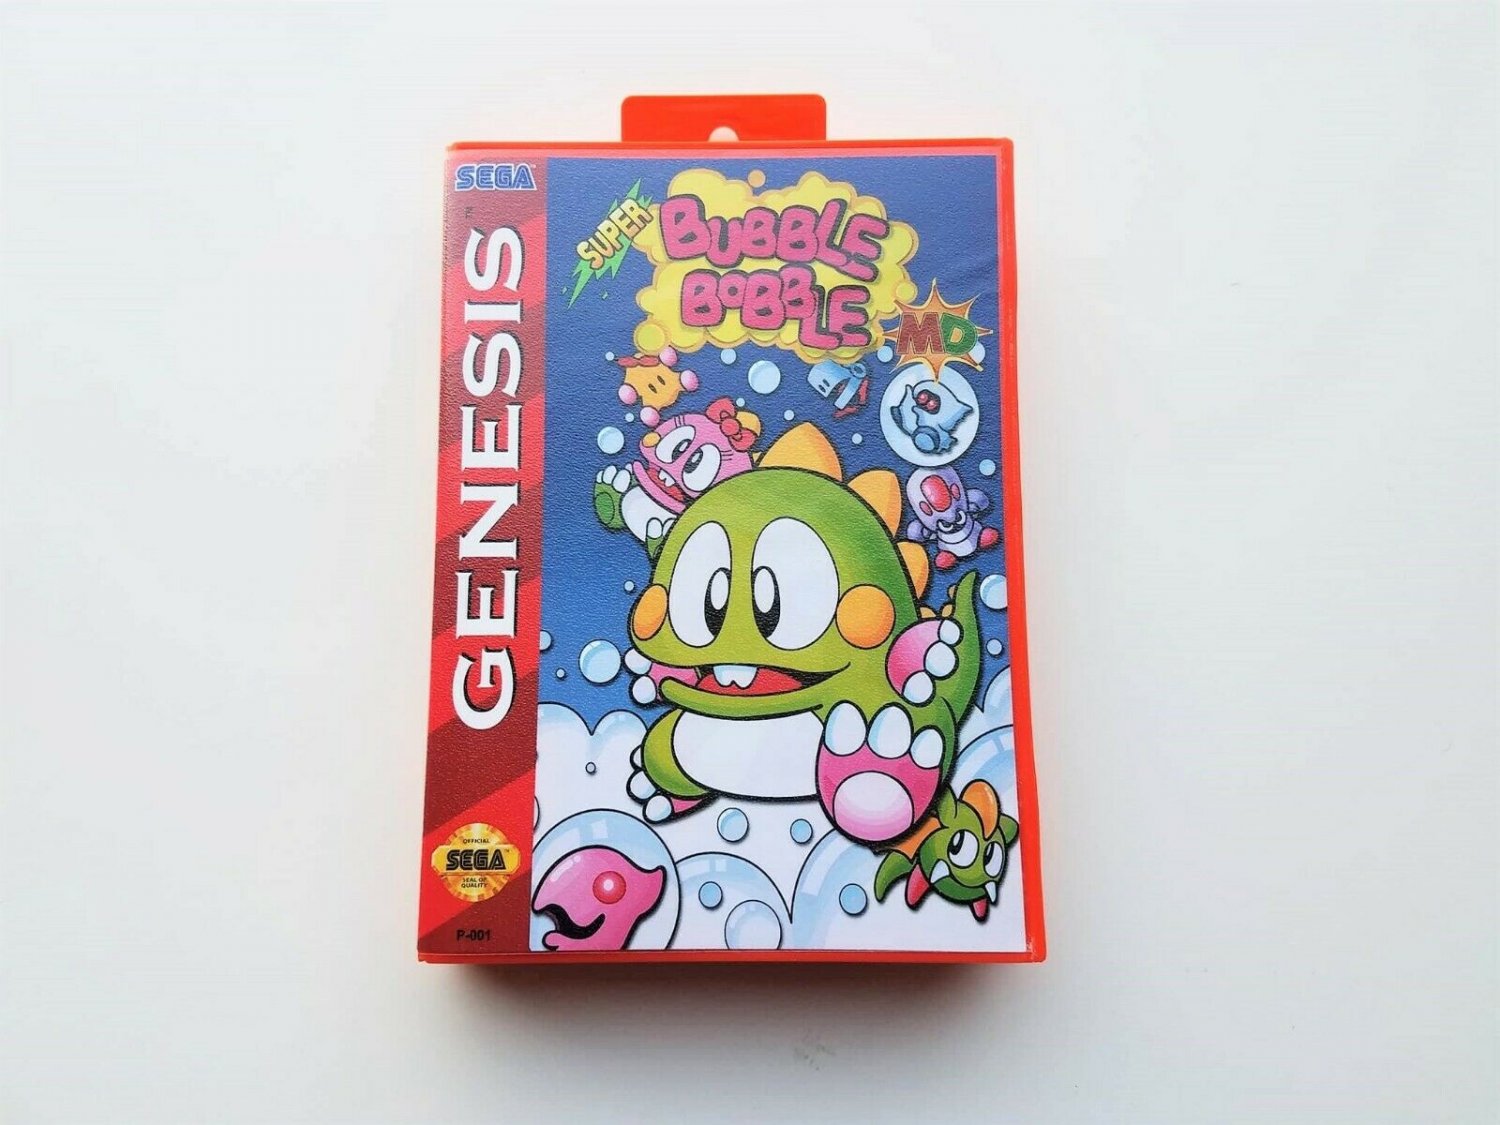 Super Bubble Bobble MD Game Sega Genesis Custom Game / Red Case (USA Seller)